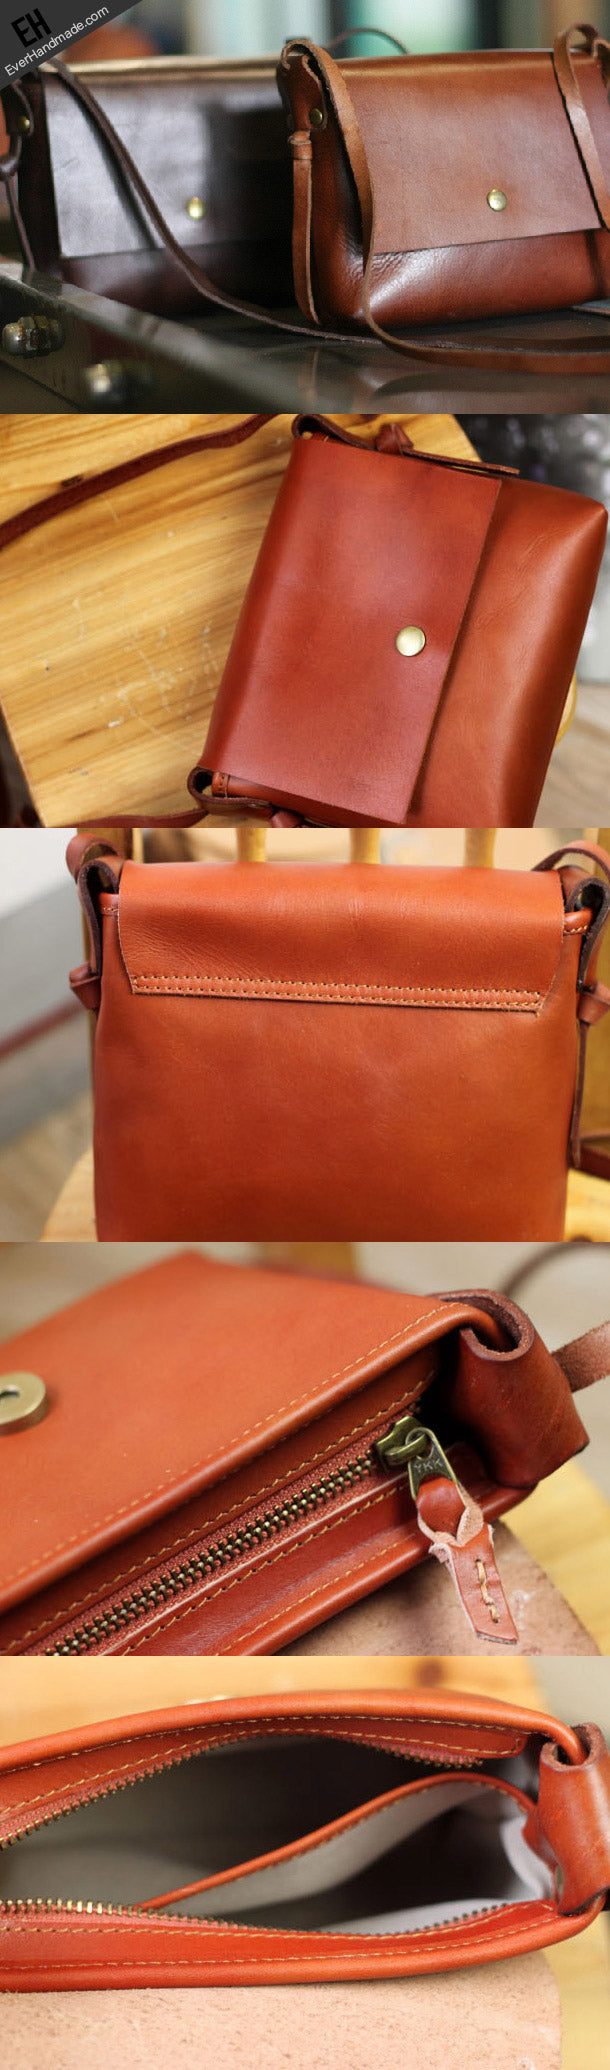 Handmade rustic leather Satchel School crossbody Shoulder Bag for wome